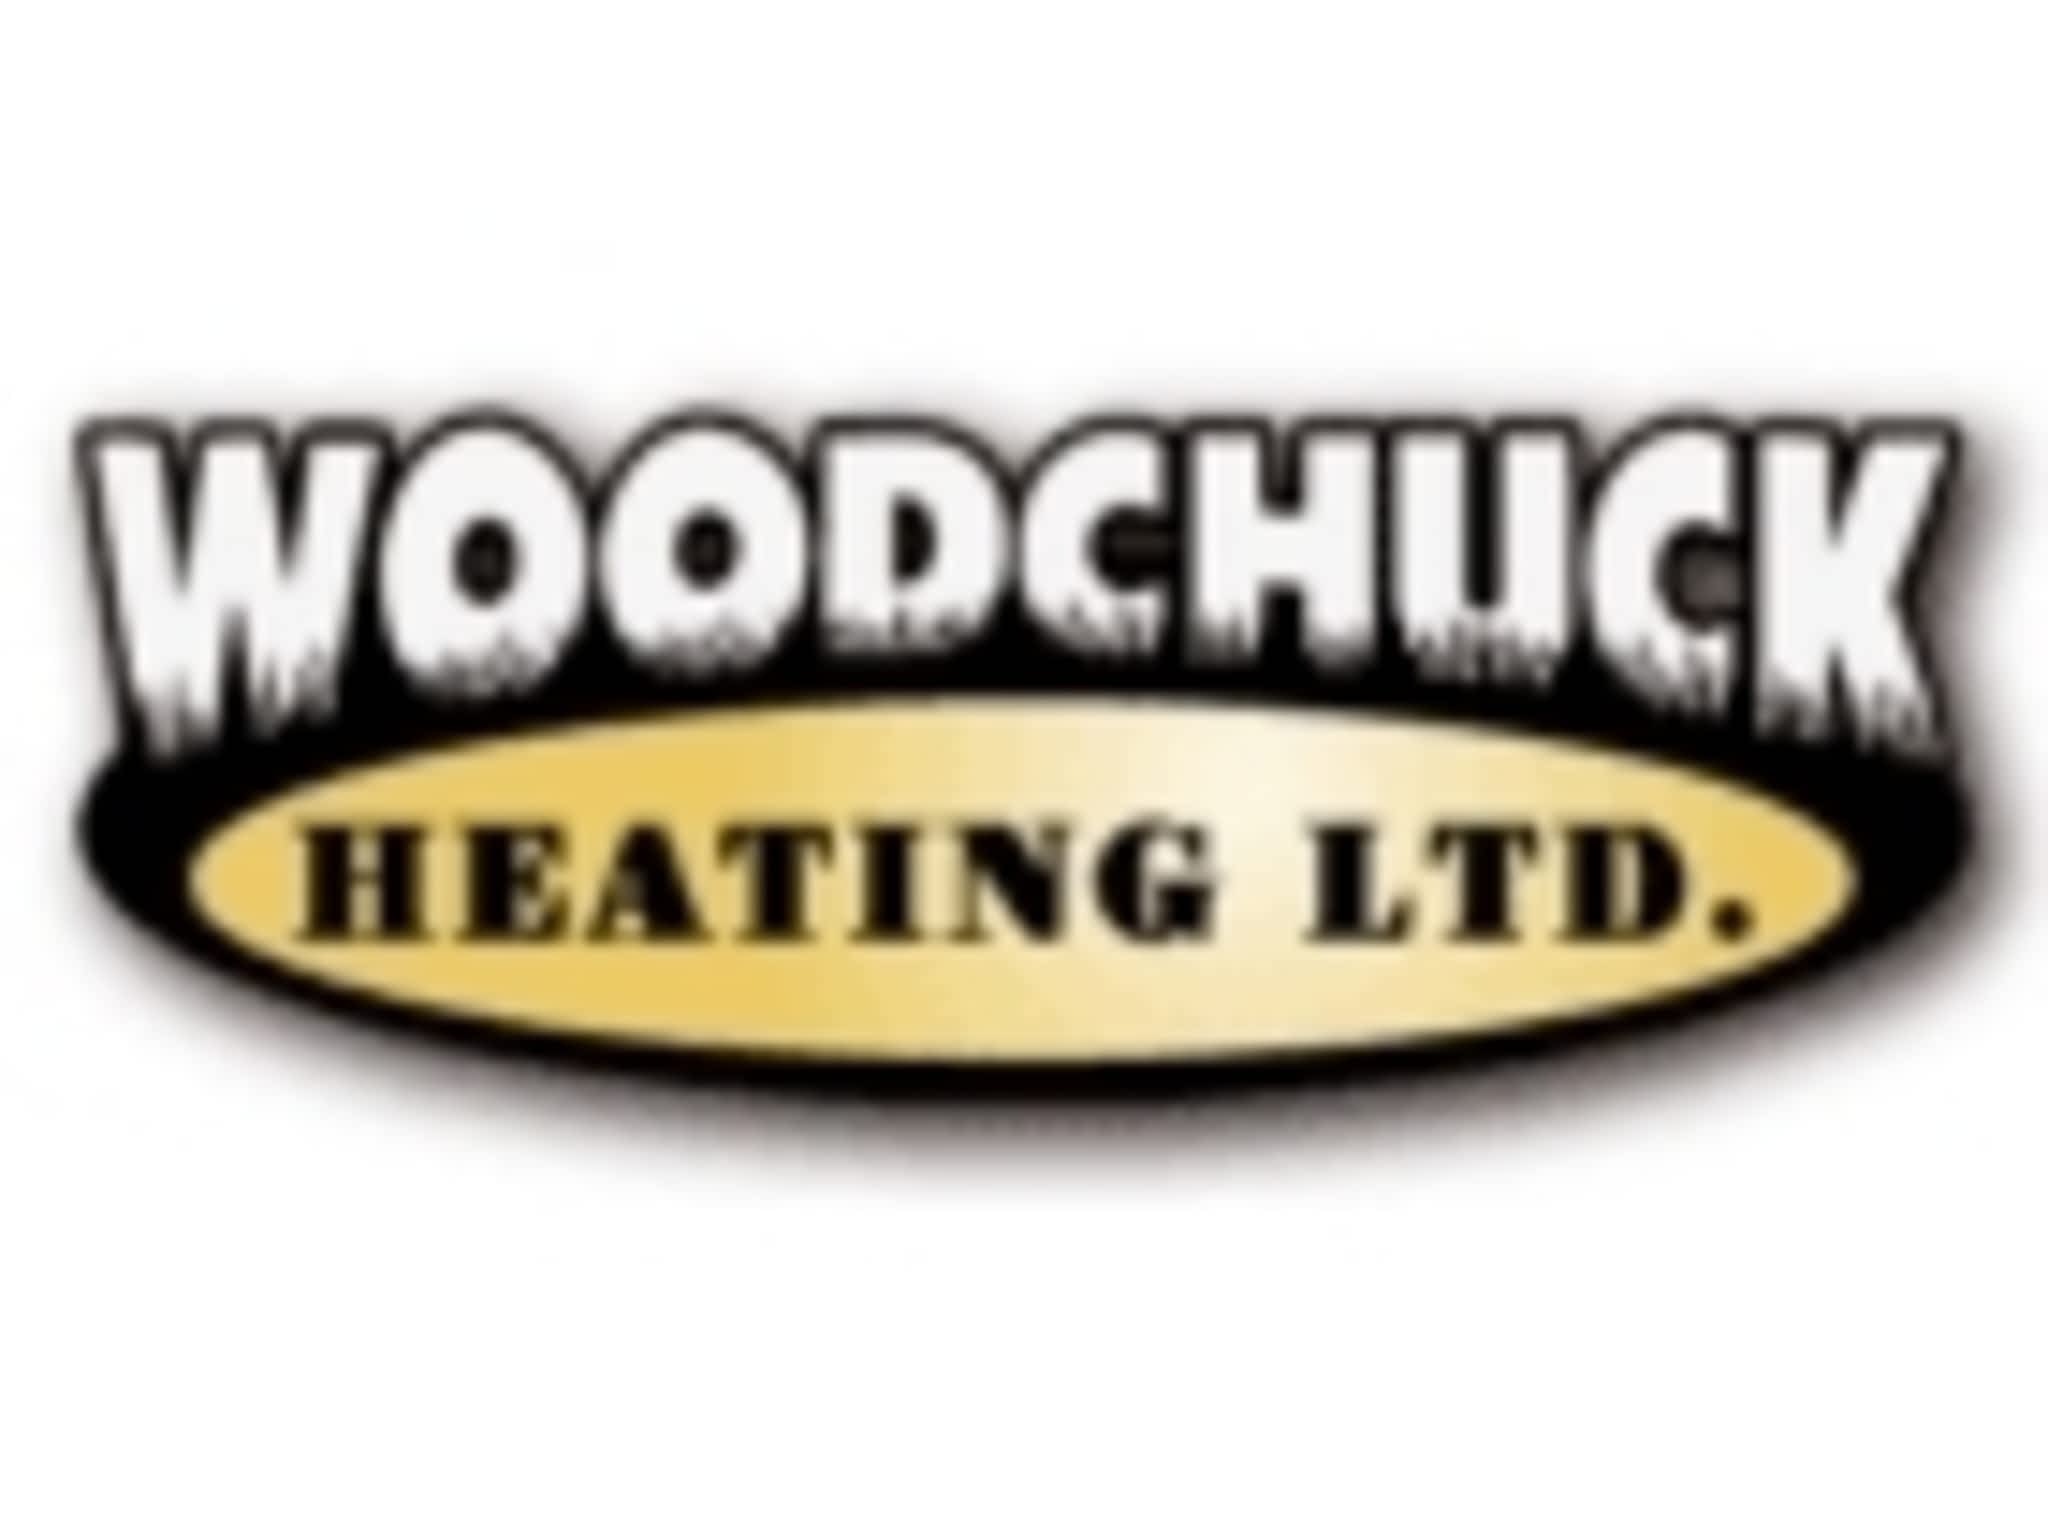 photo Woodchuck Heating Ltd